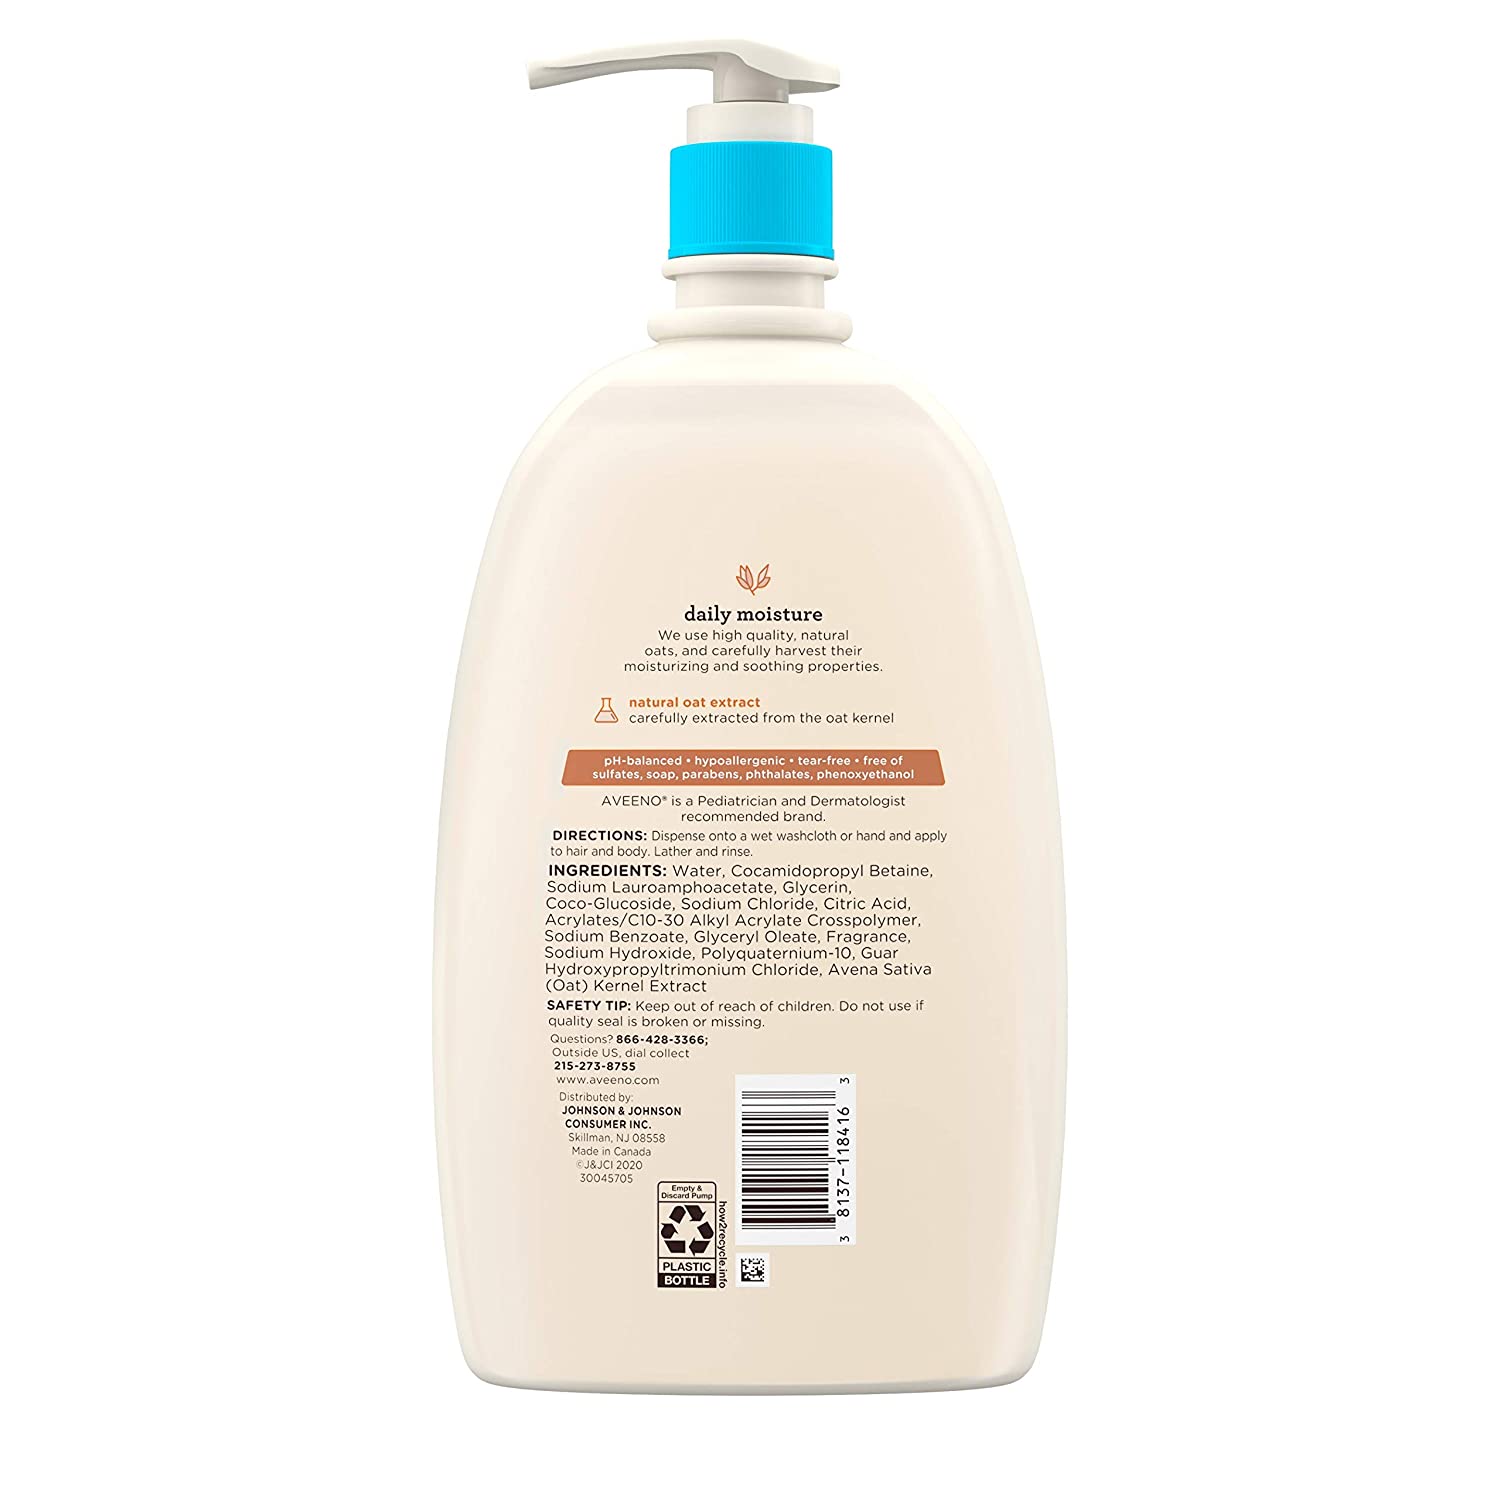 AVEENO BABY Daily moisture wash & shampoo, natural oat extract - 976ml